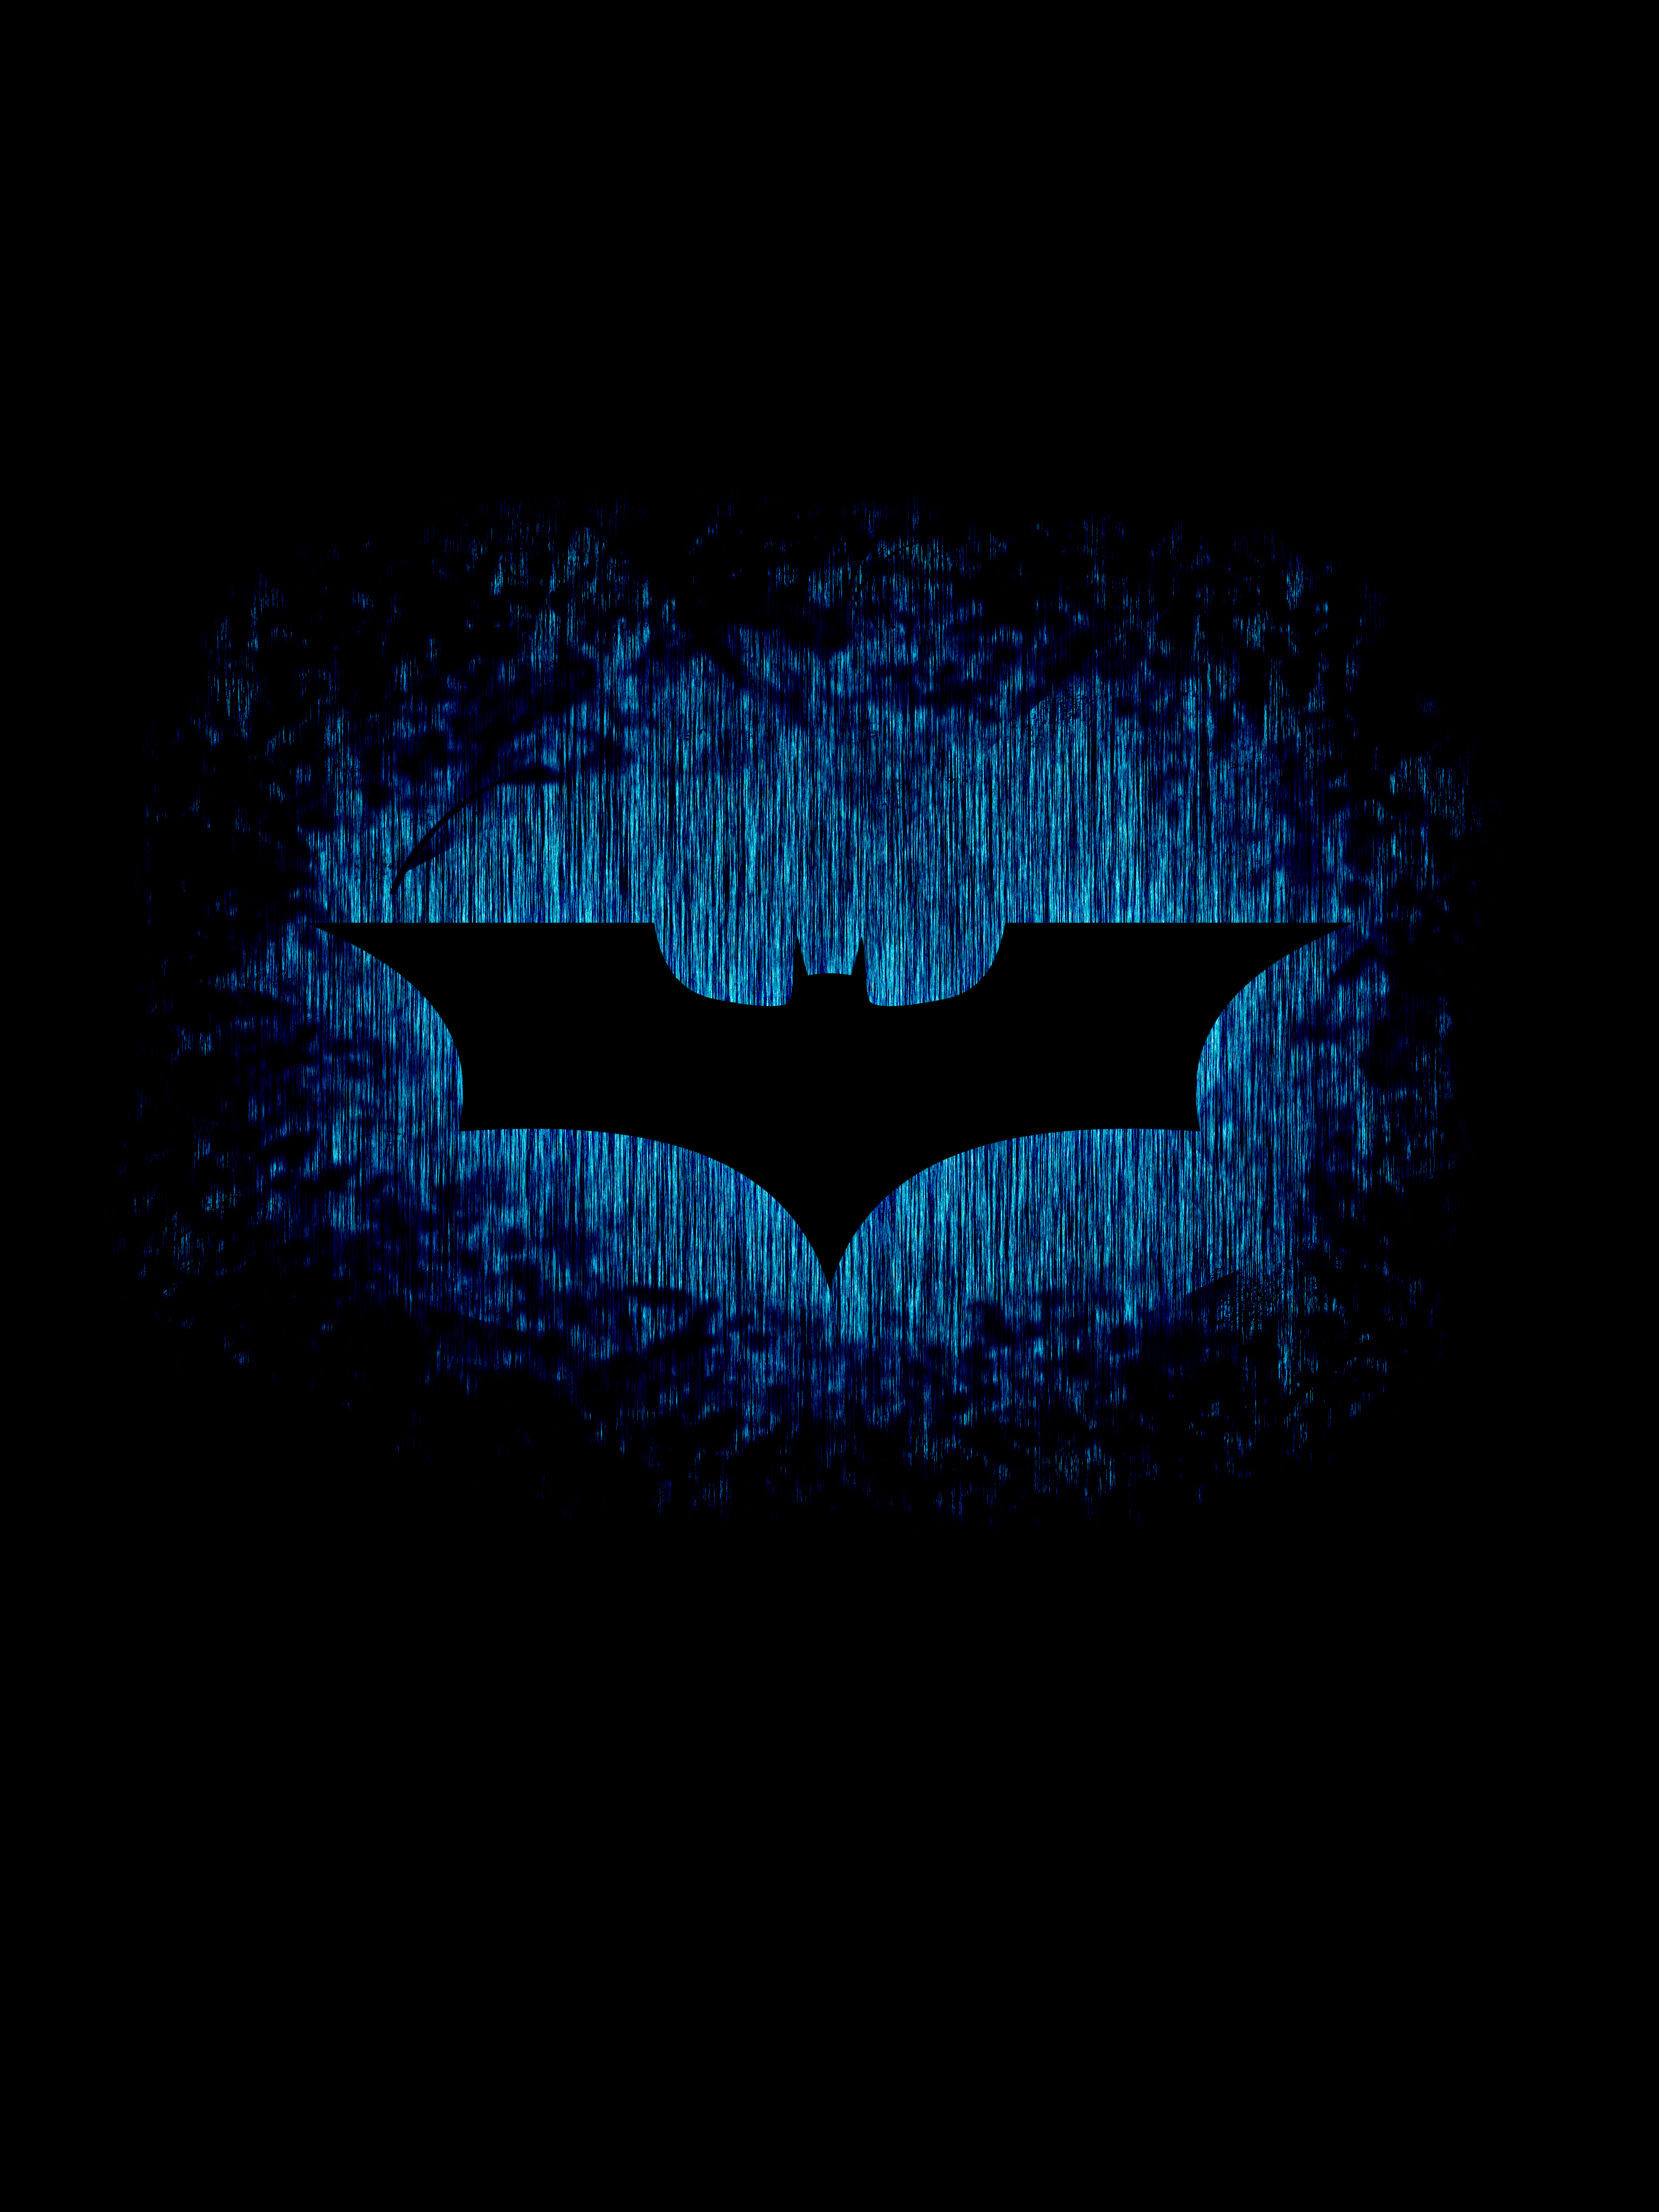 Free download wallpaper science fiction the dark knight rises batman 3